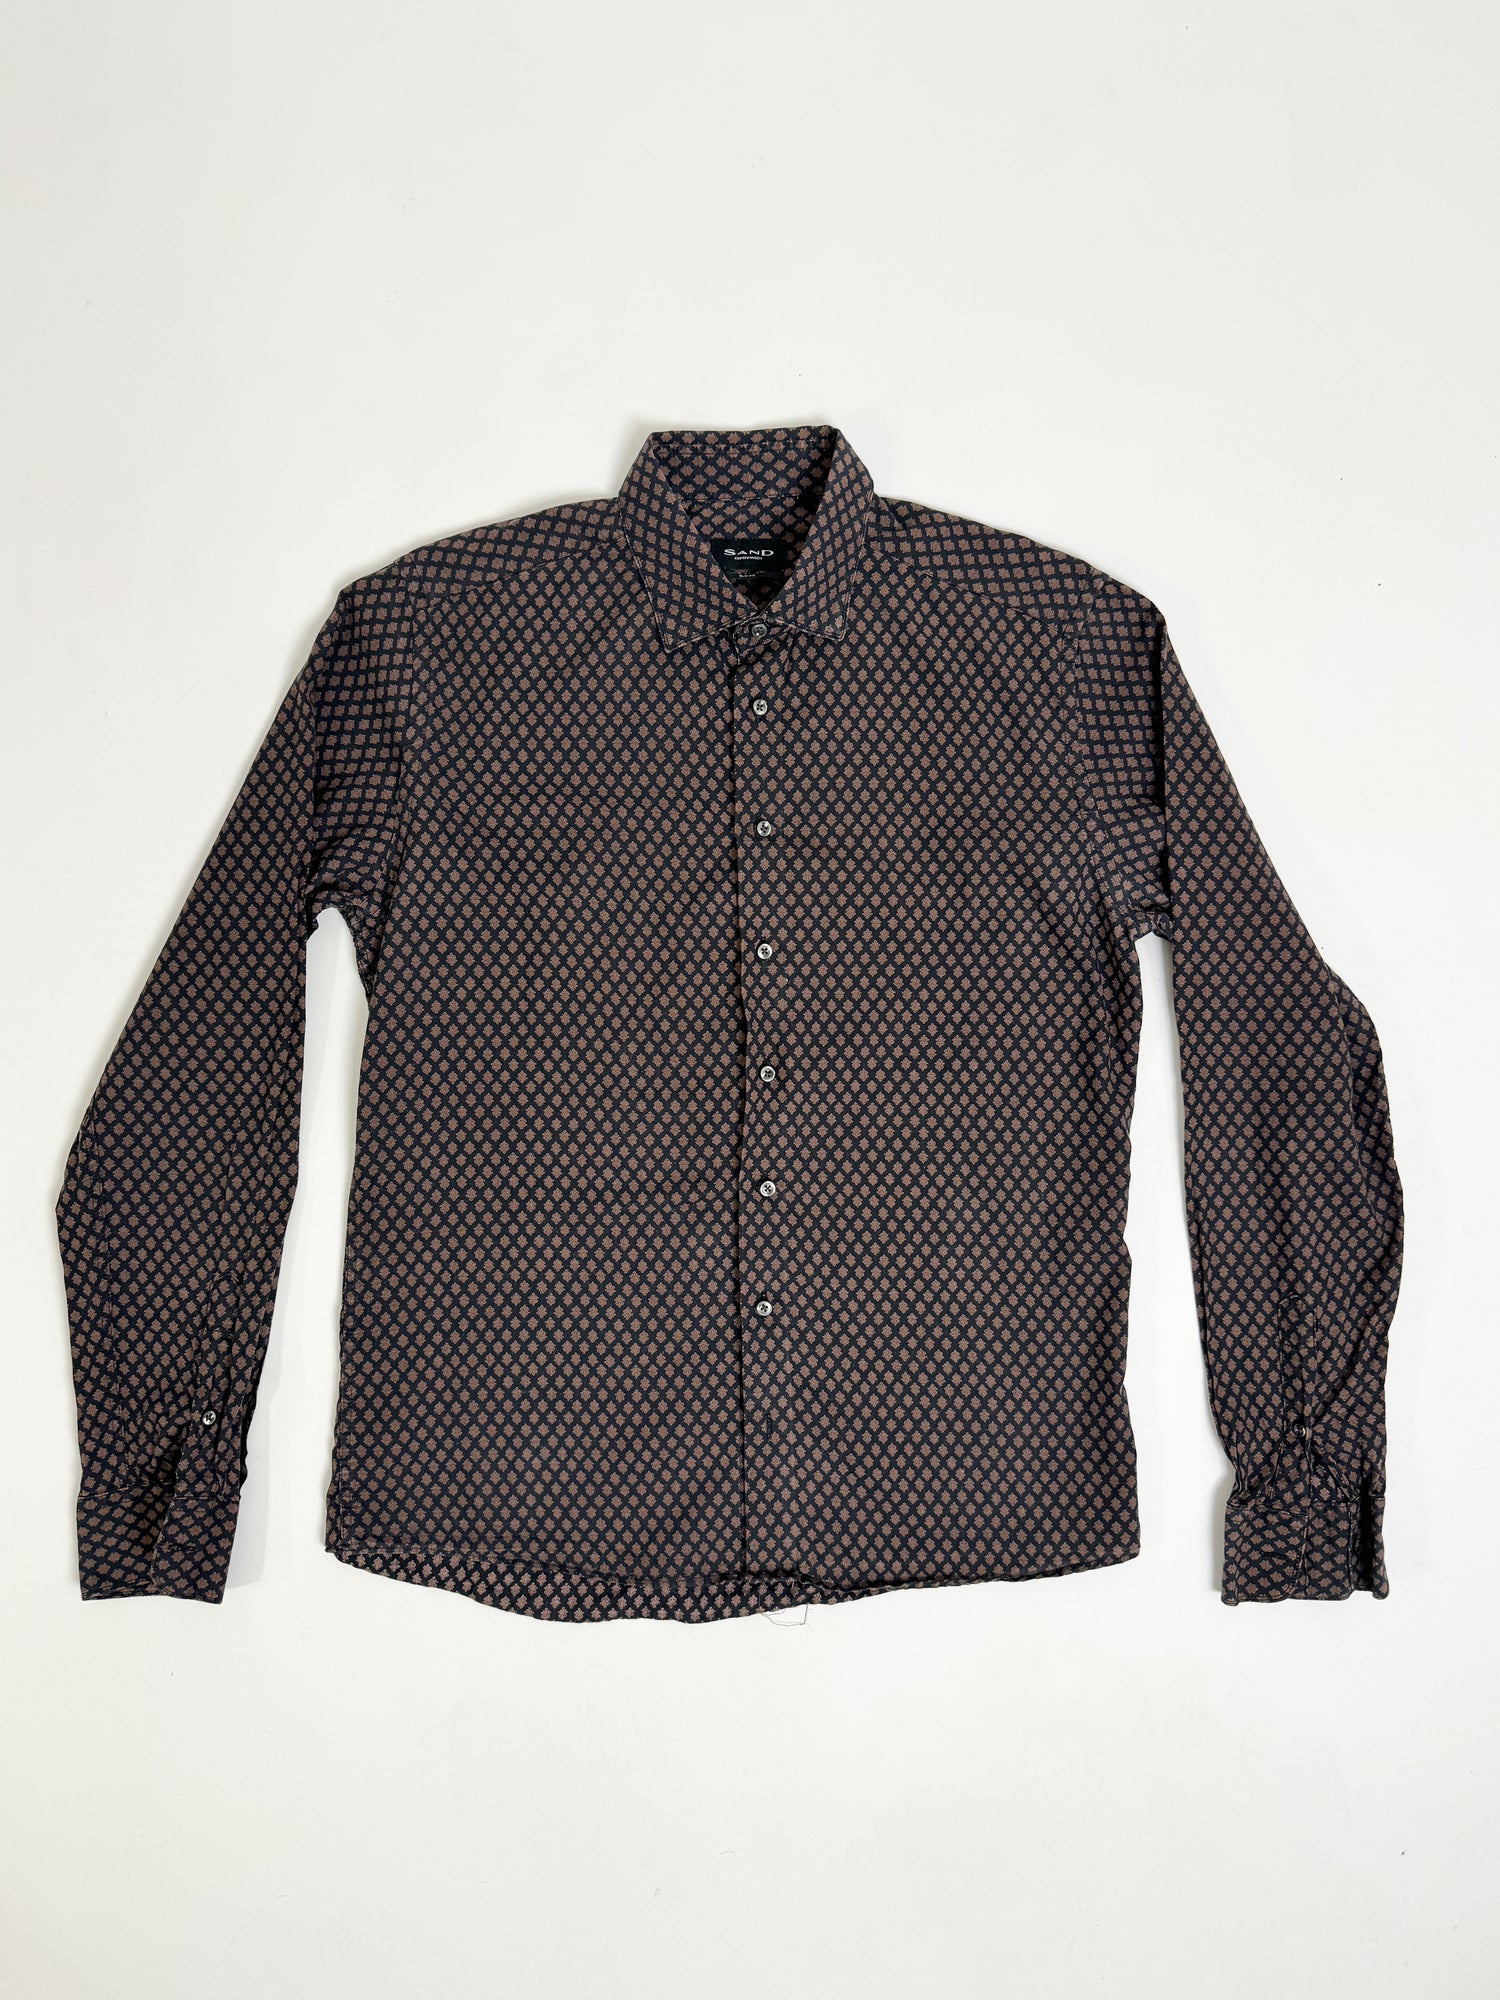 Sand Copenhagen Brown and Black Pattern Cotton Shirt